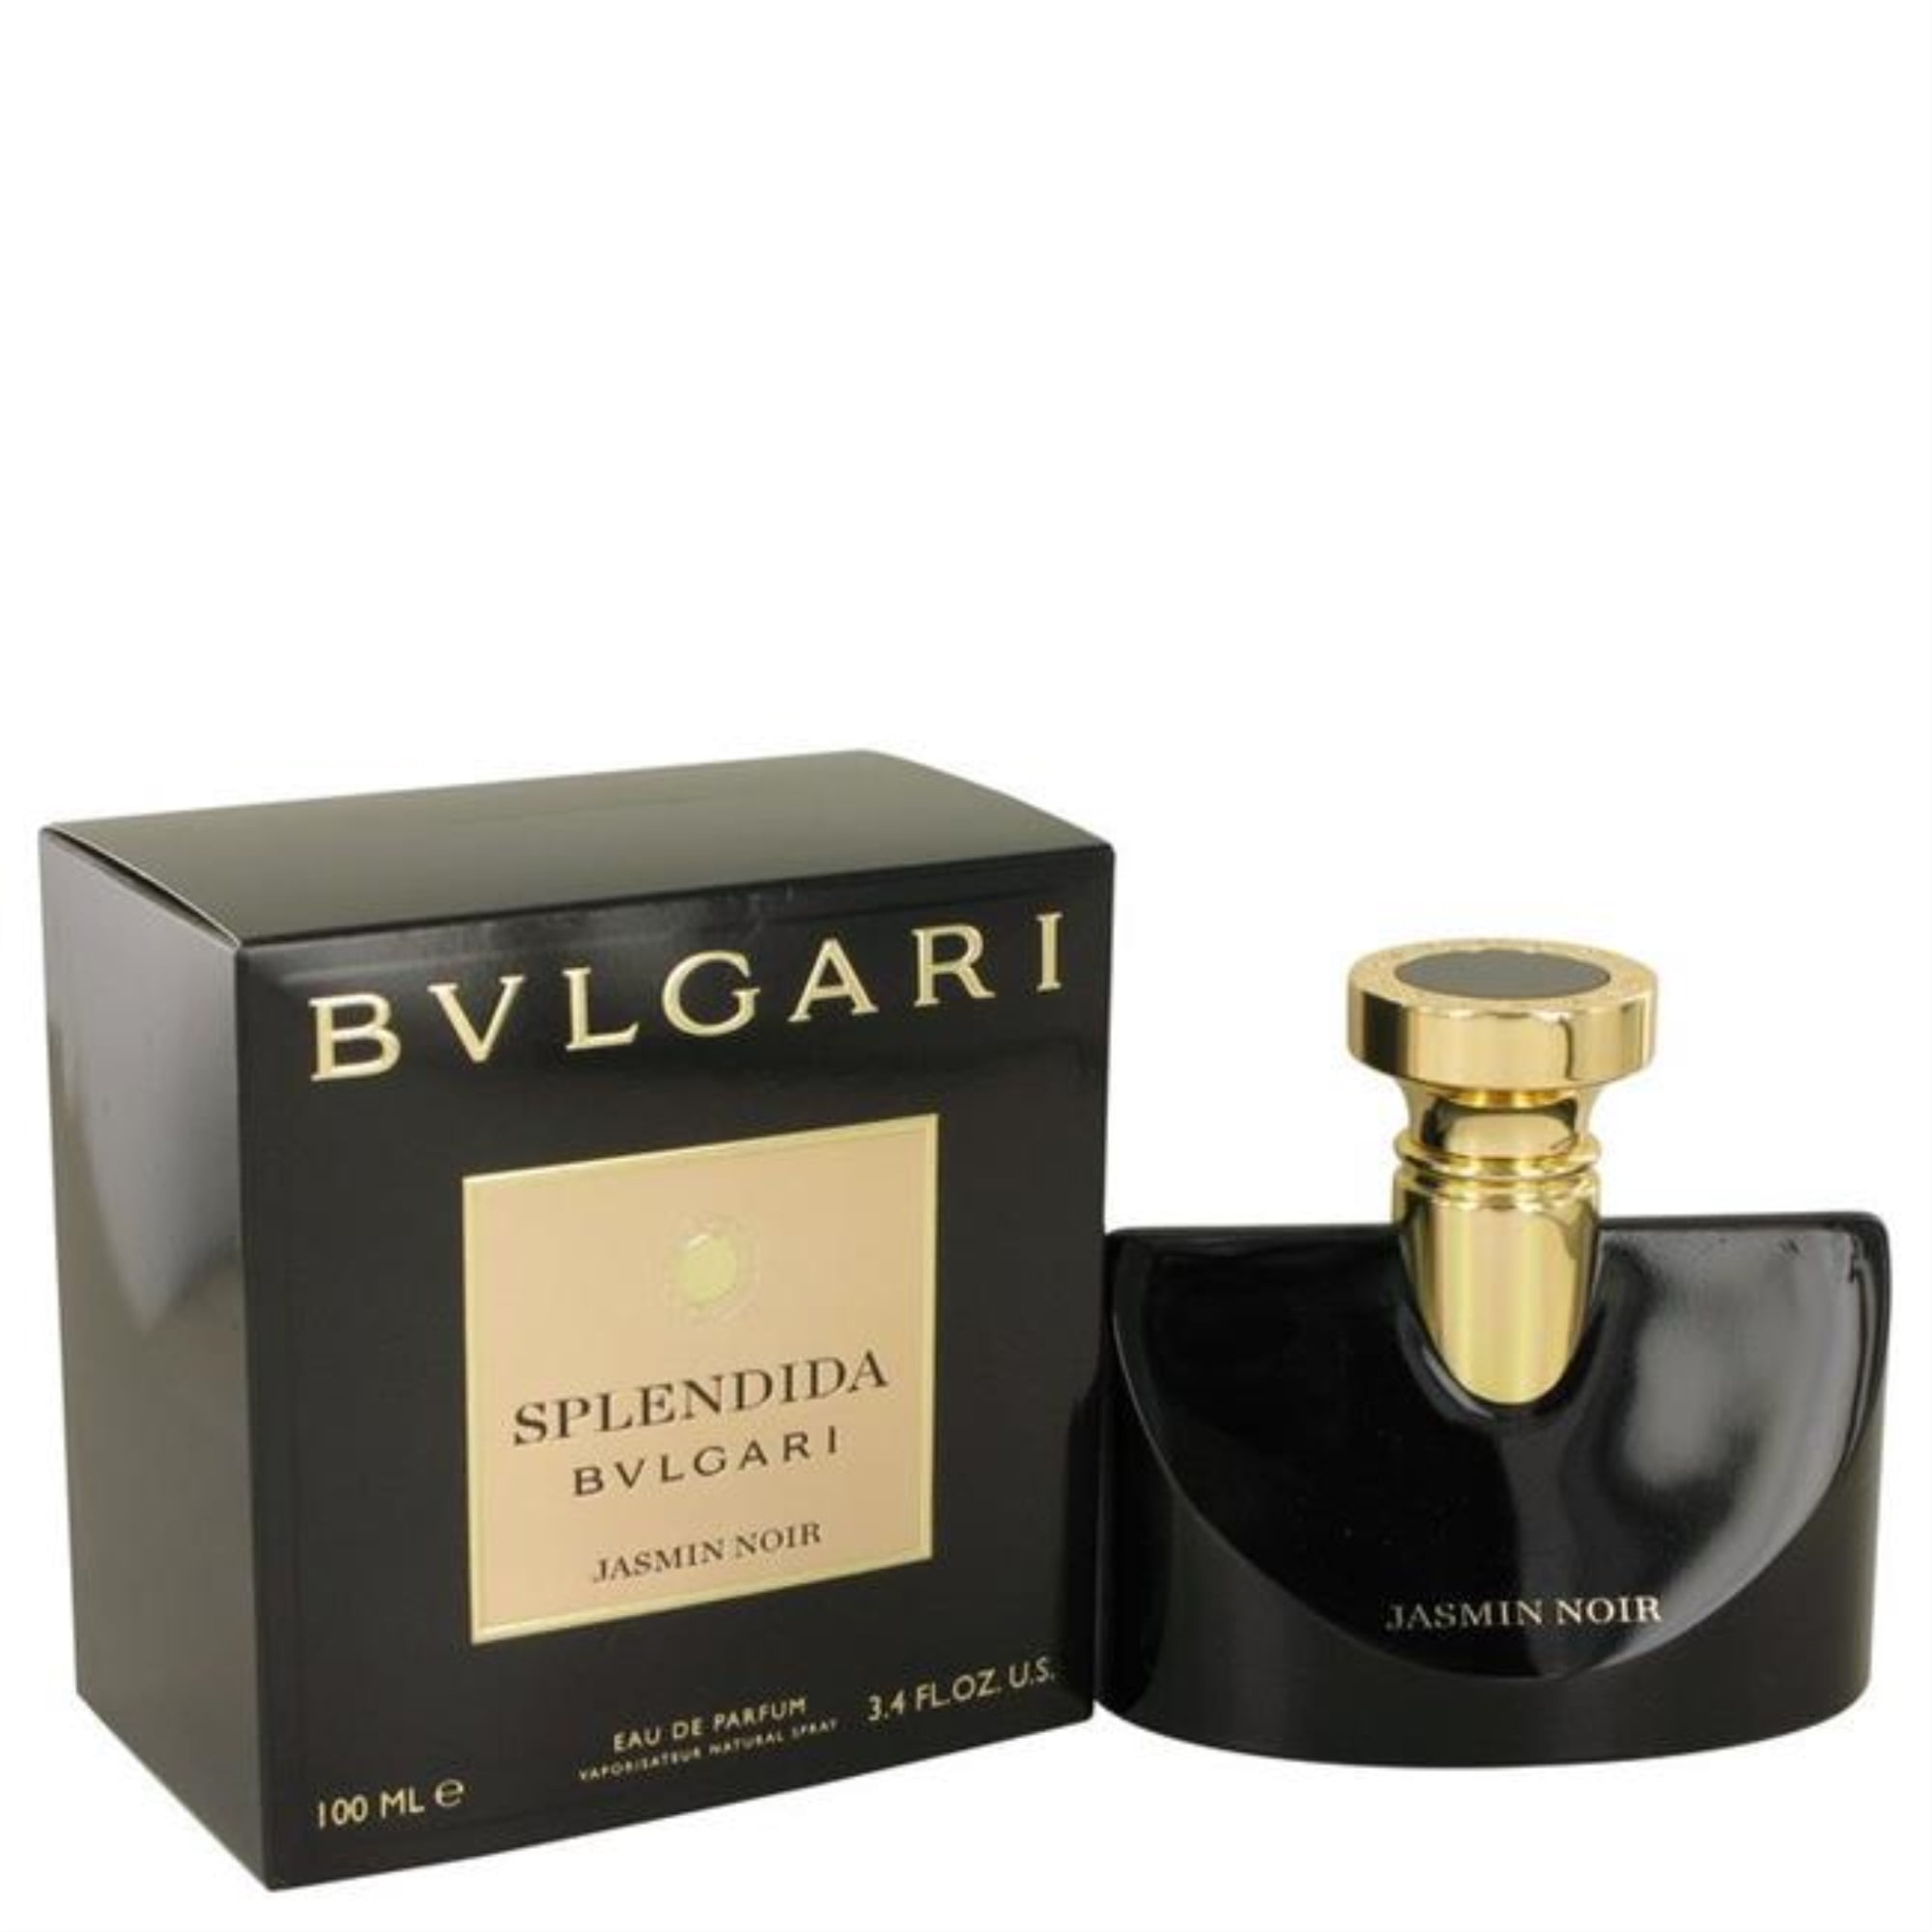 bvlgari jasmin noir eau de parfum